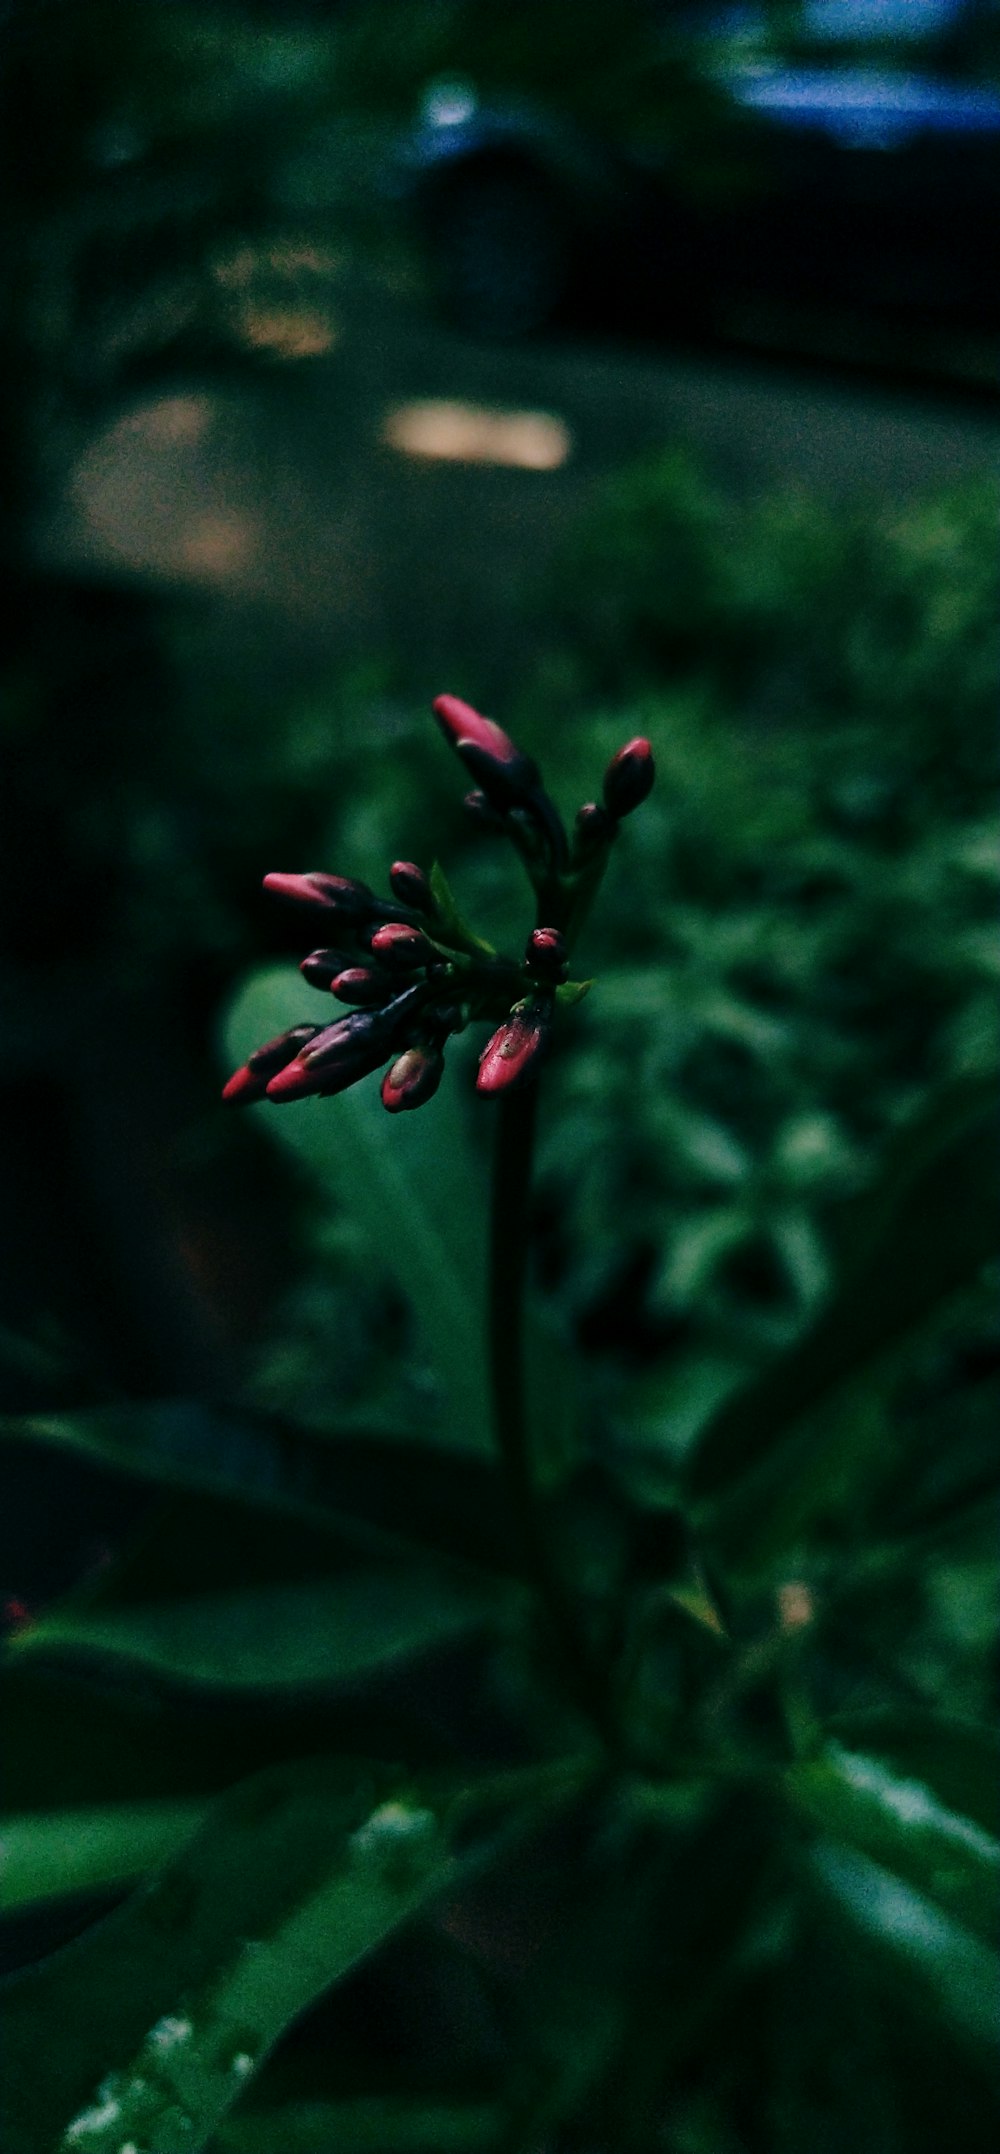 a close up of a flower in a garden